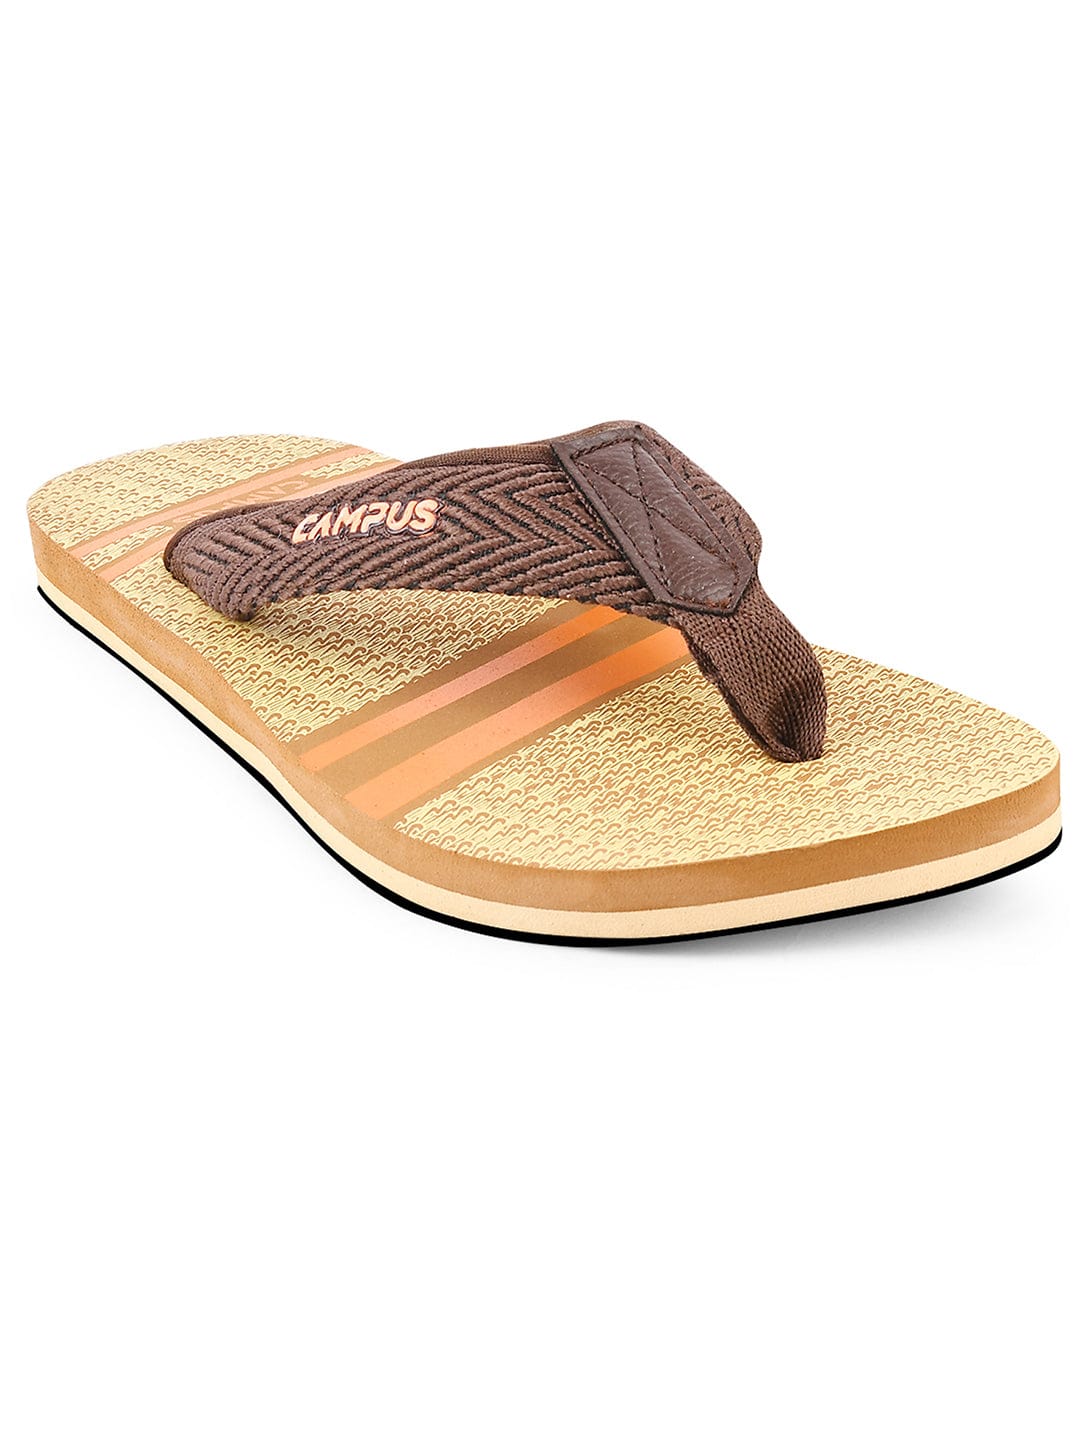 Bahamas Flip Flops Sandals Slippers for Women with Summer Fun Prints -  Walmart.com